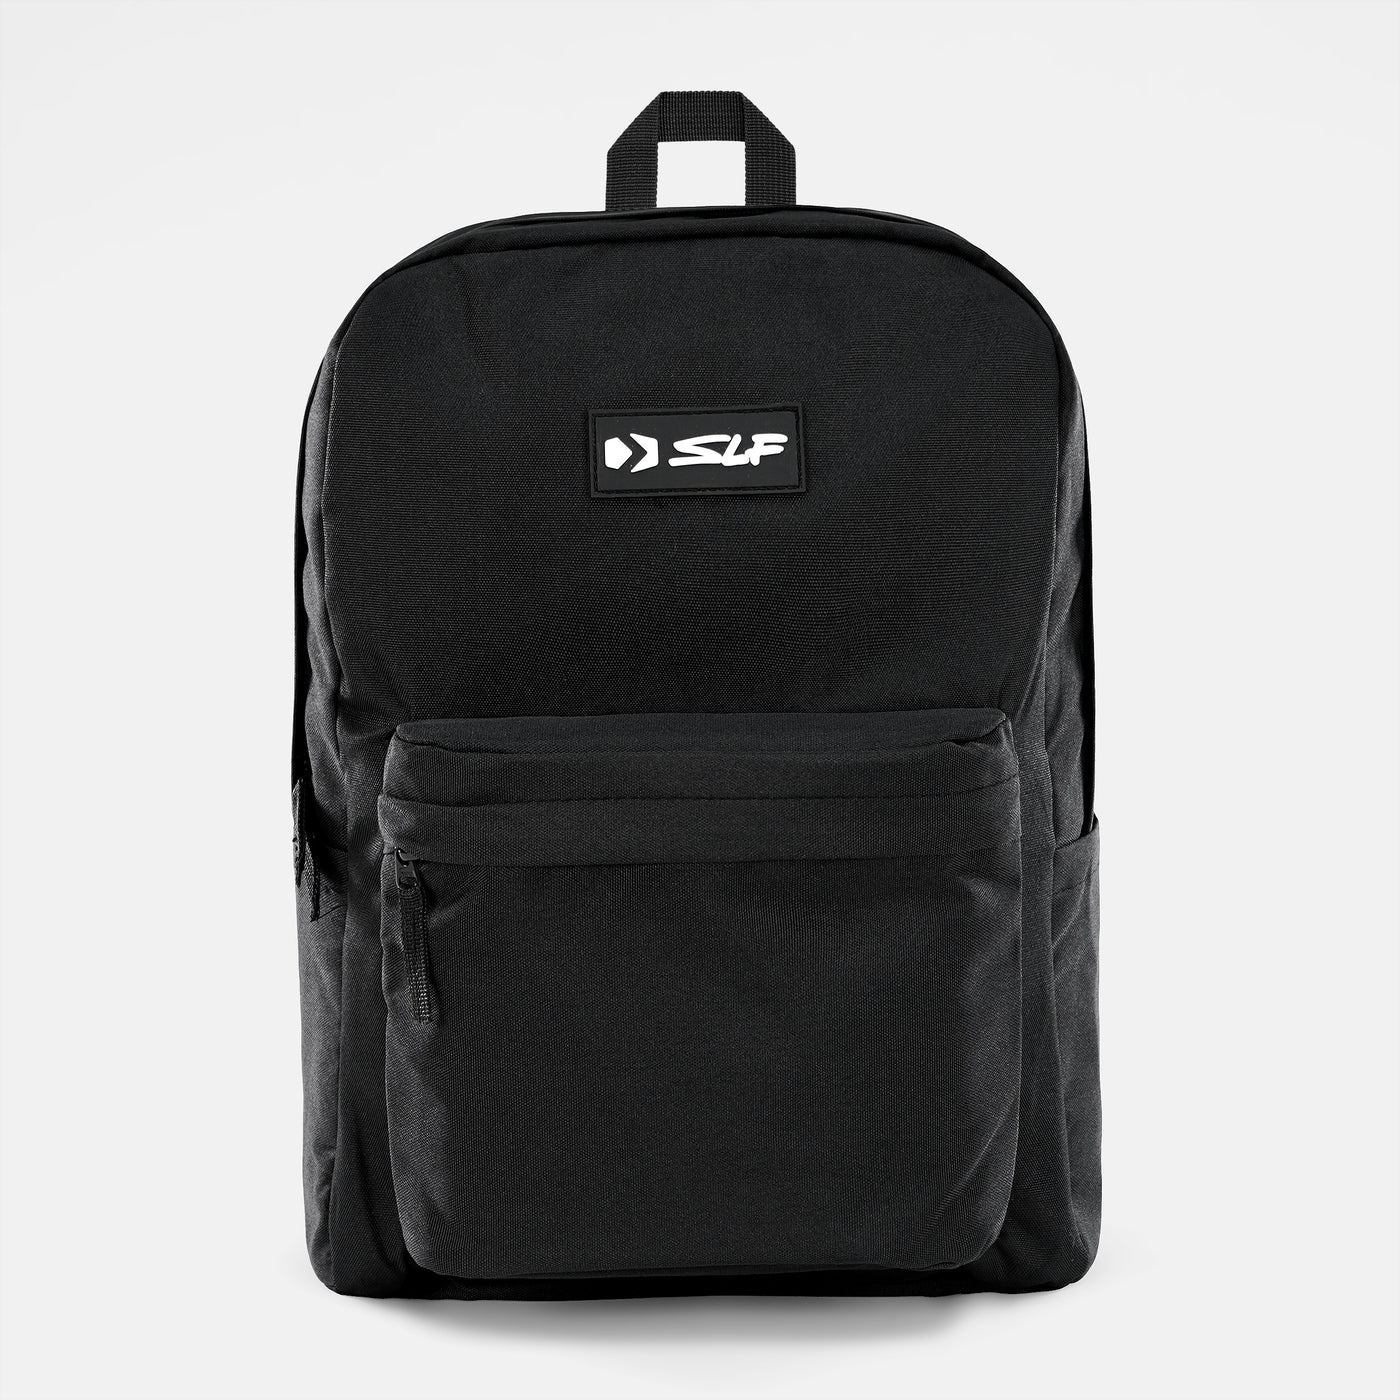 Basic Black Backpack